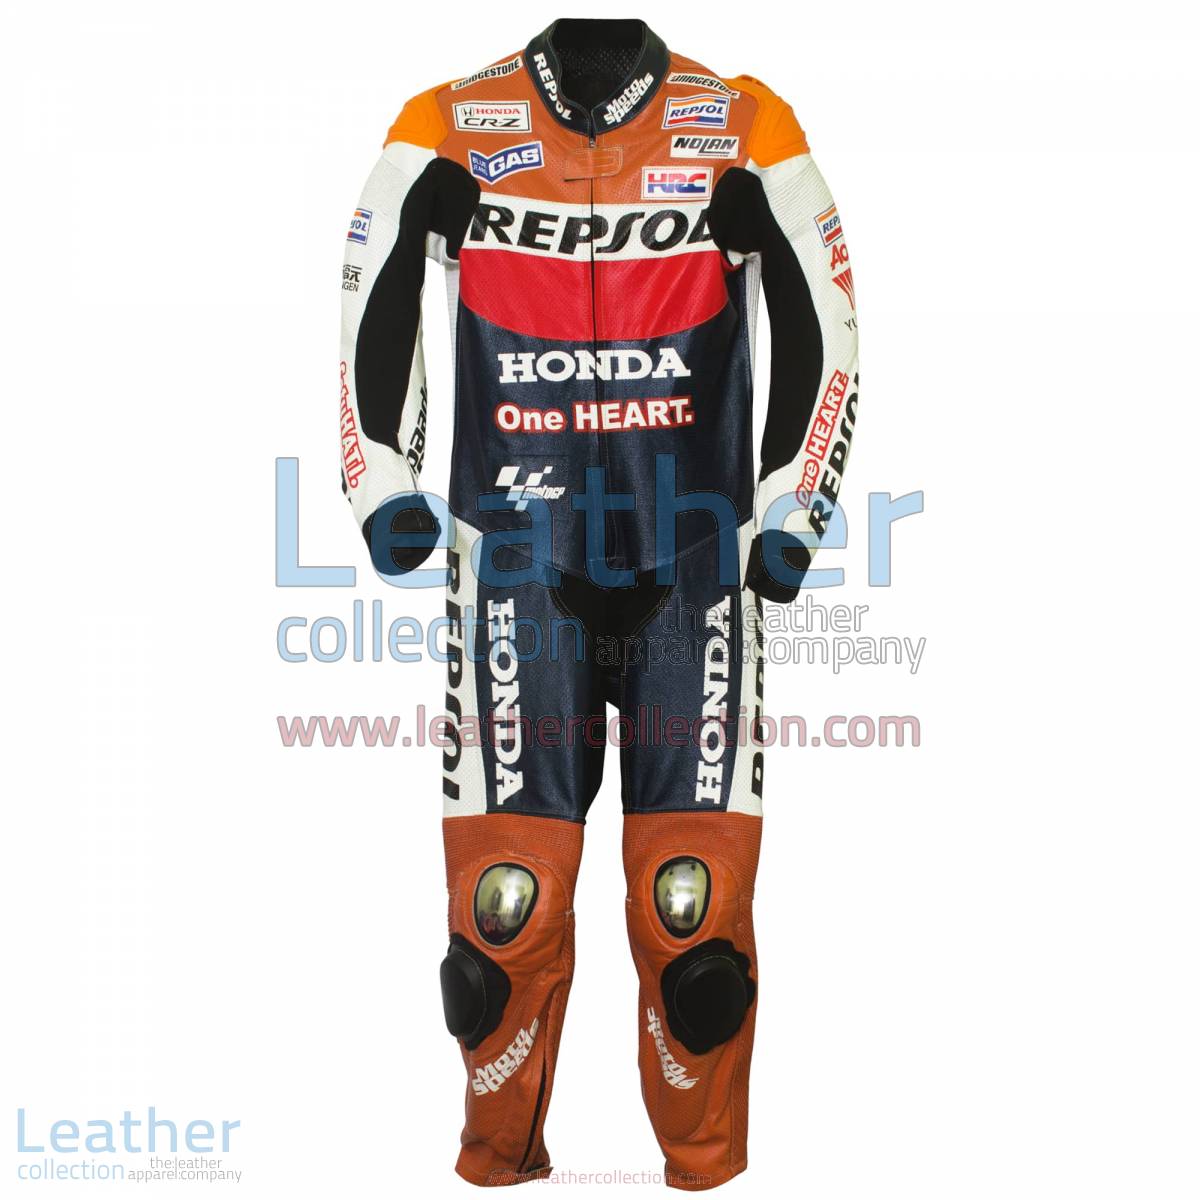 Dani Pedrosa 2012 Honda Repsol One Heart Race Suit